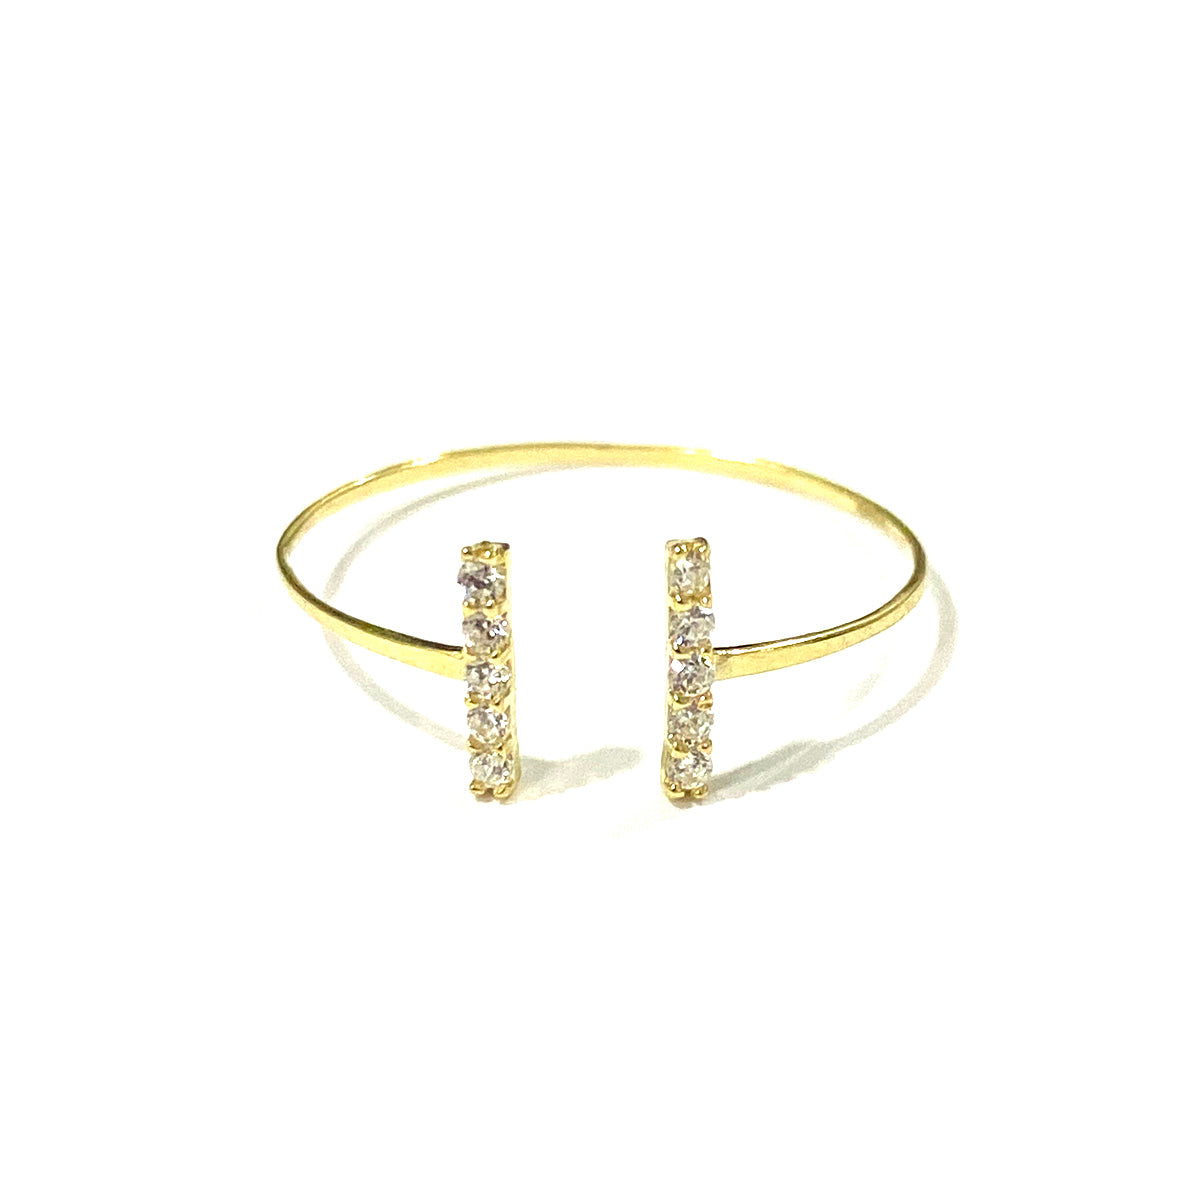 18K Pure Gold Elegant Design w/ Zircon Stone Ring